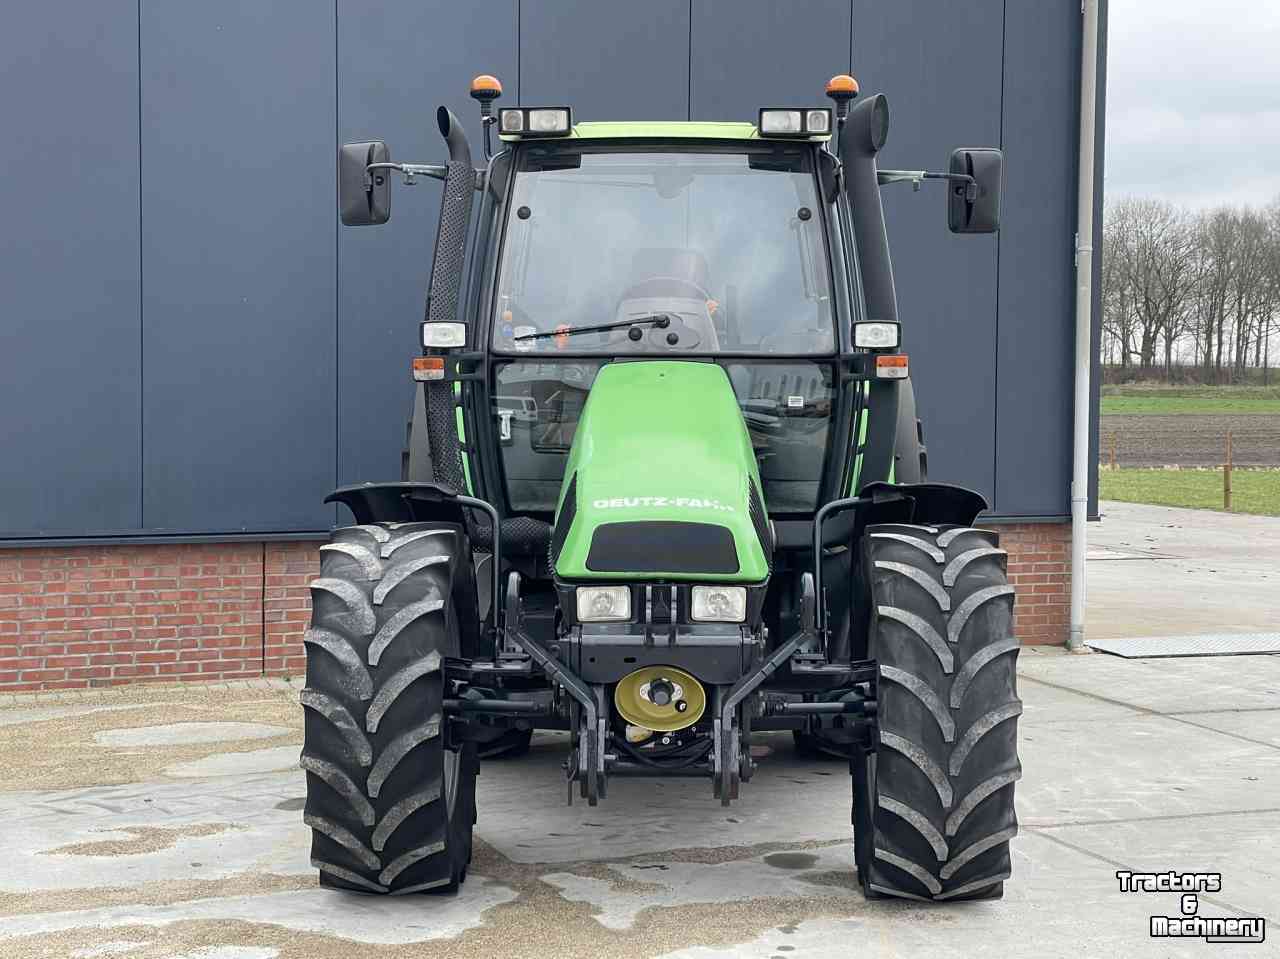 Traktoren Deutz-Fahr Agrotron 100 MK2 Lustrum